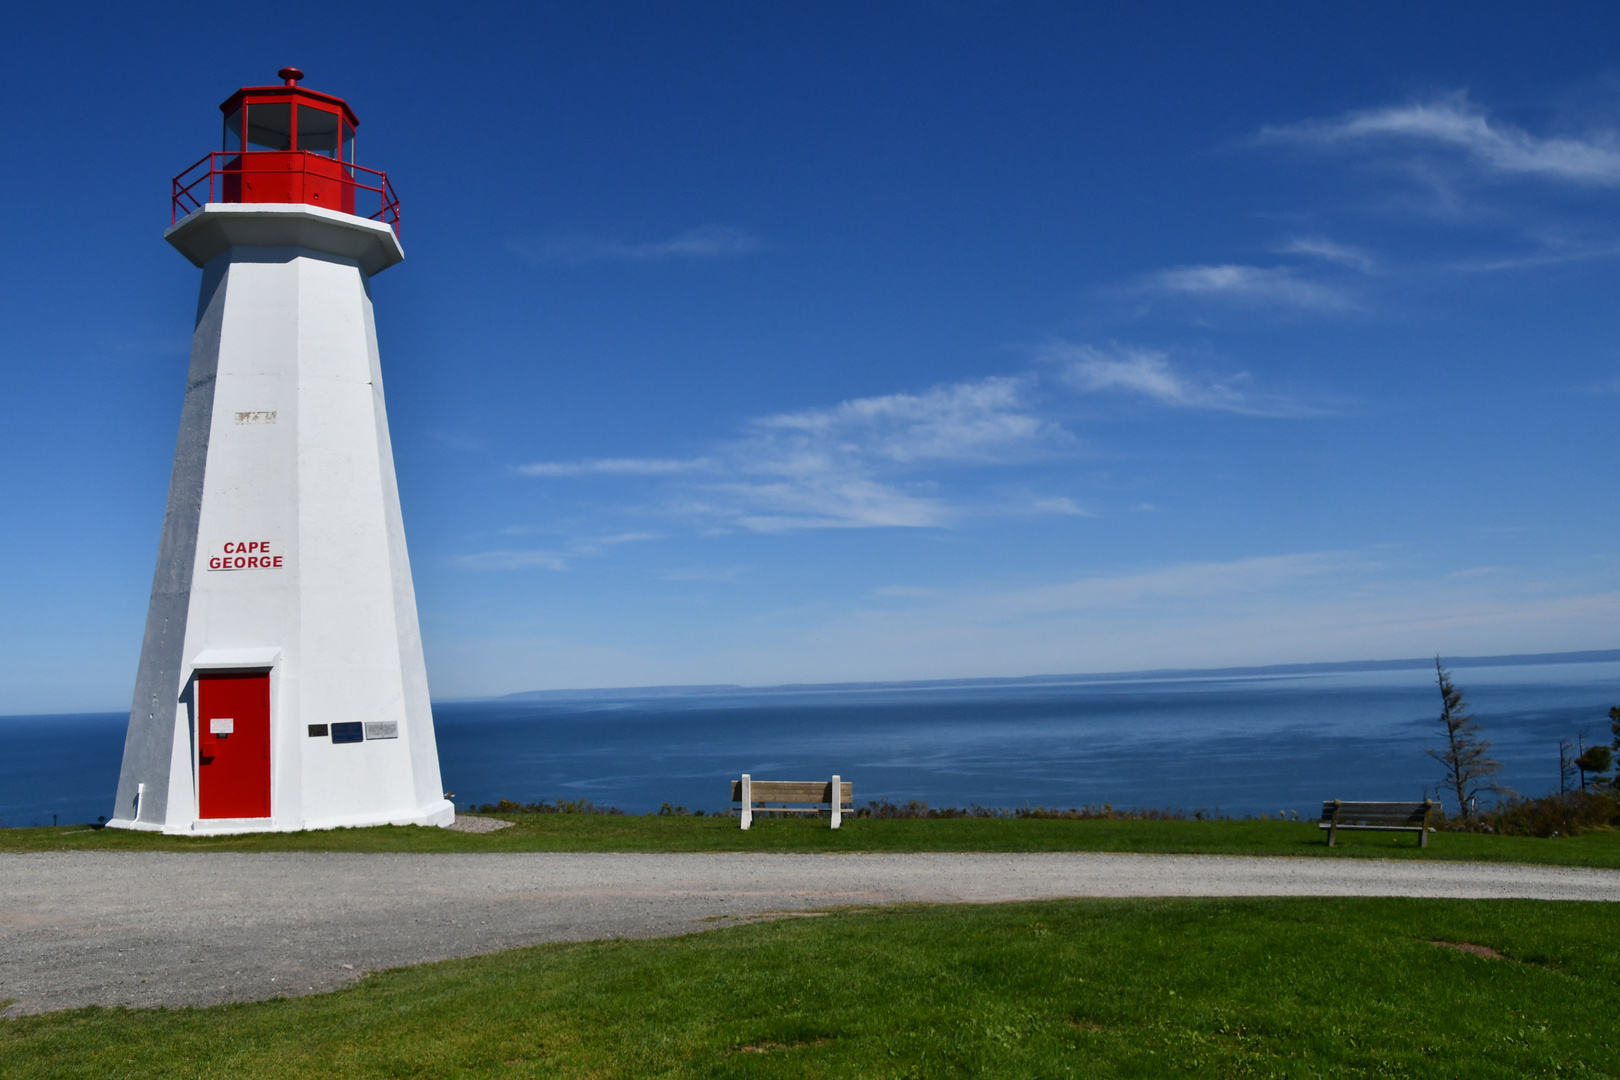 Cape George, Nova Scotia